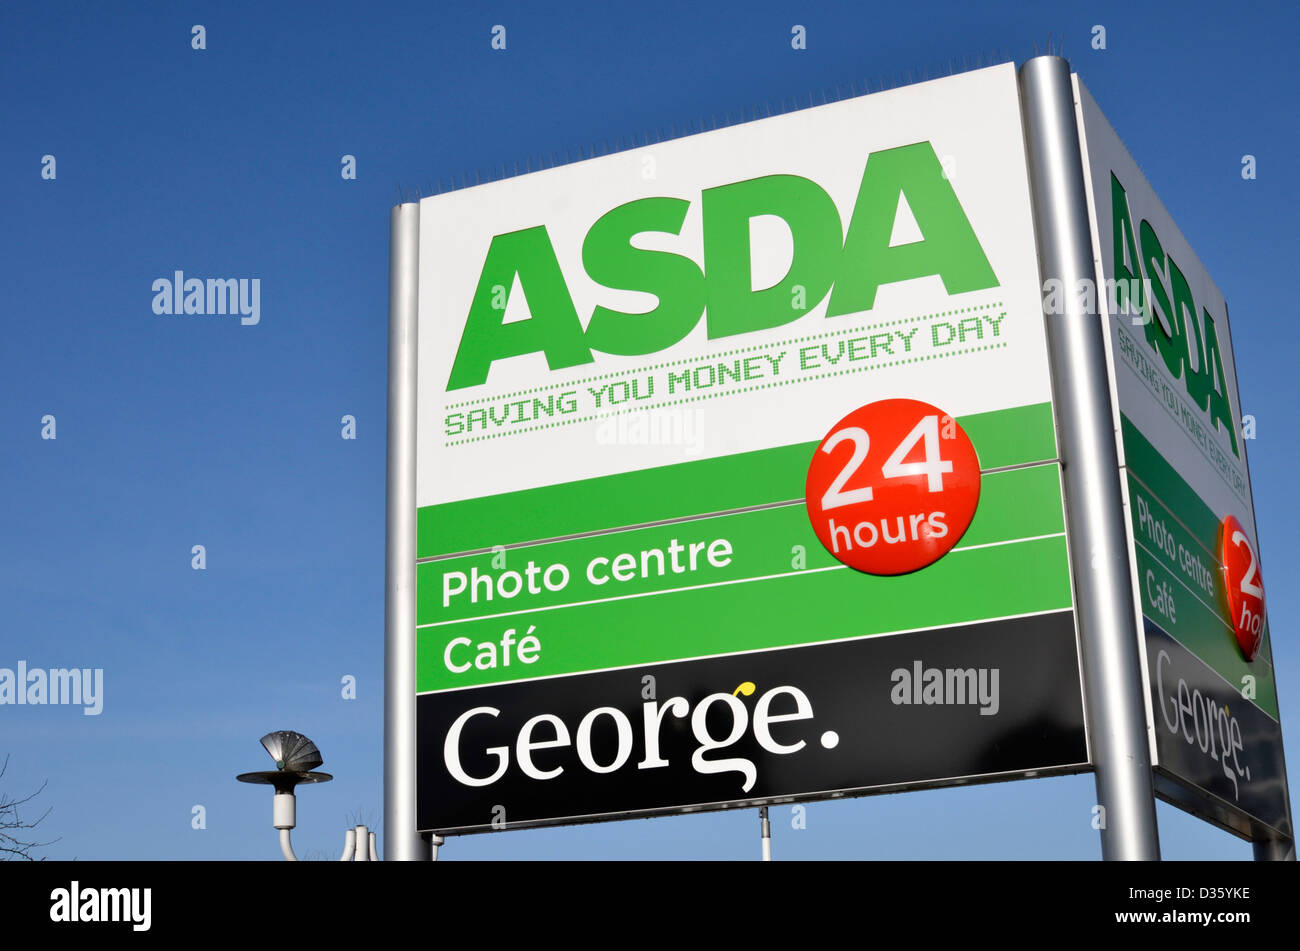 Asda superstore sign, London, UK Stock Photo